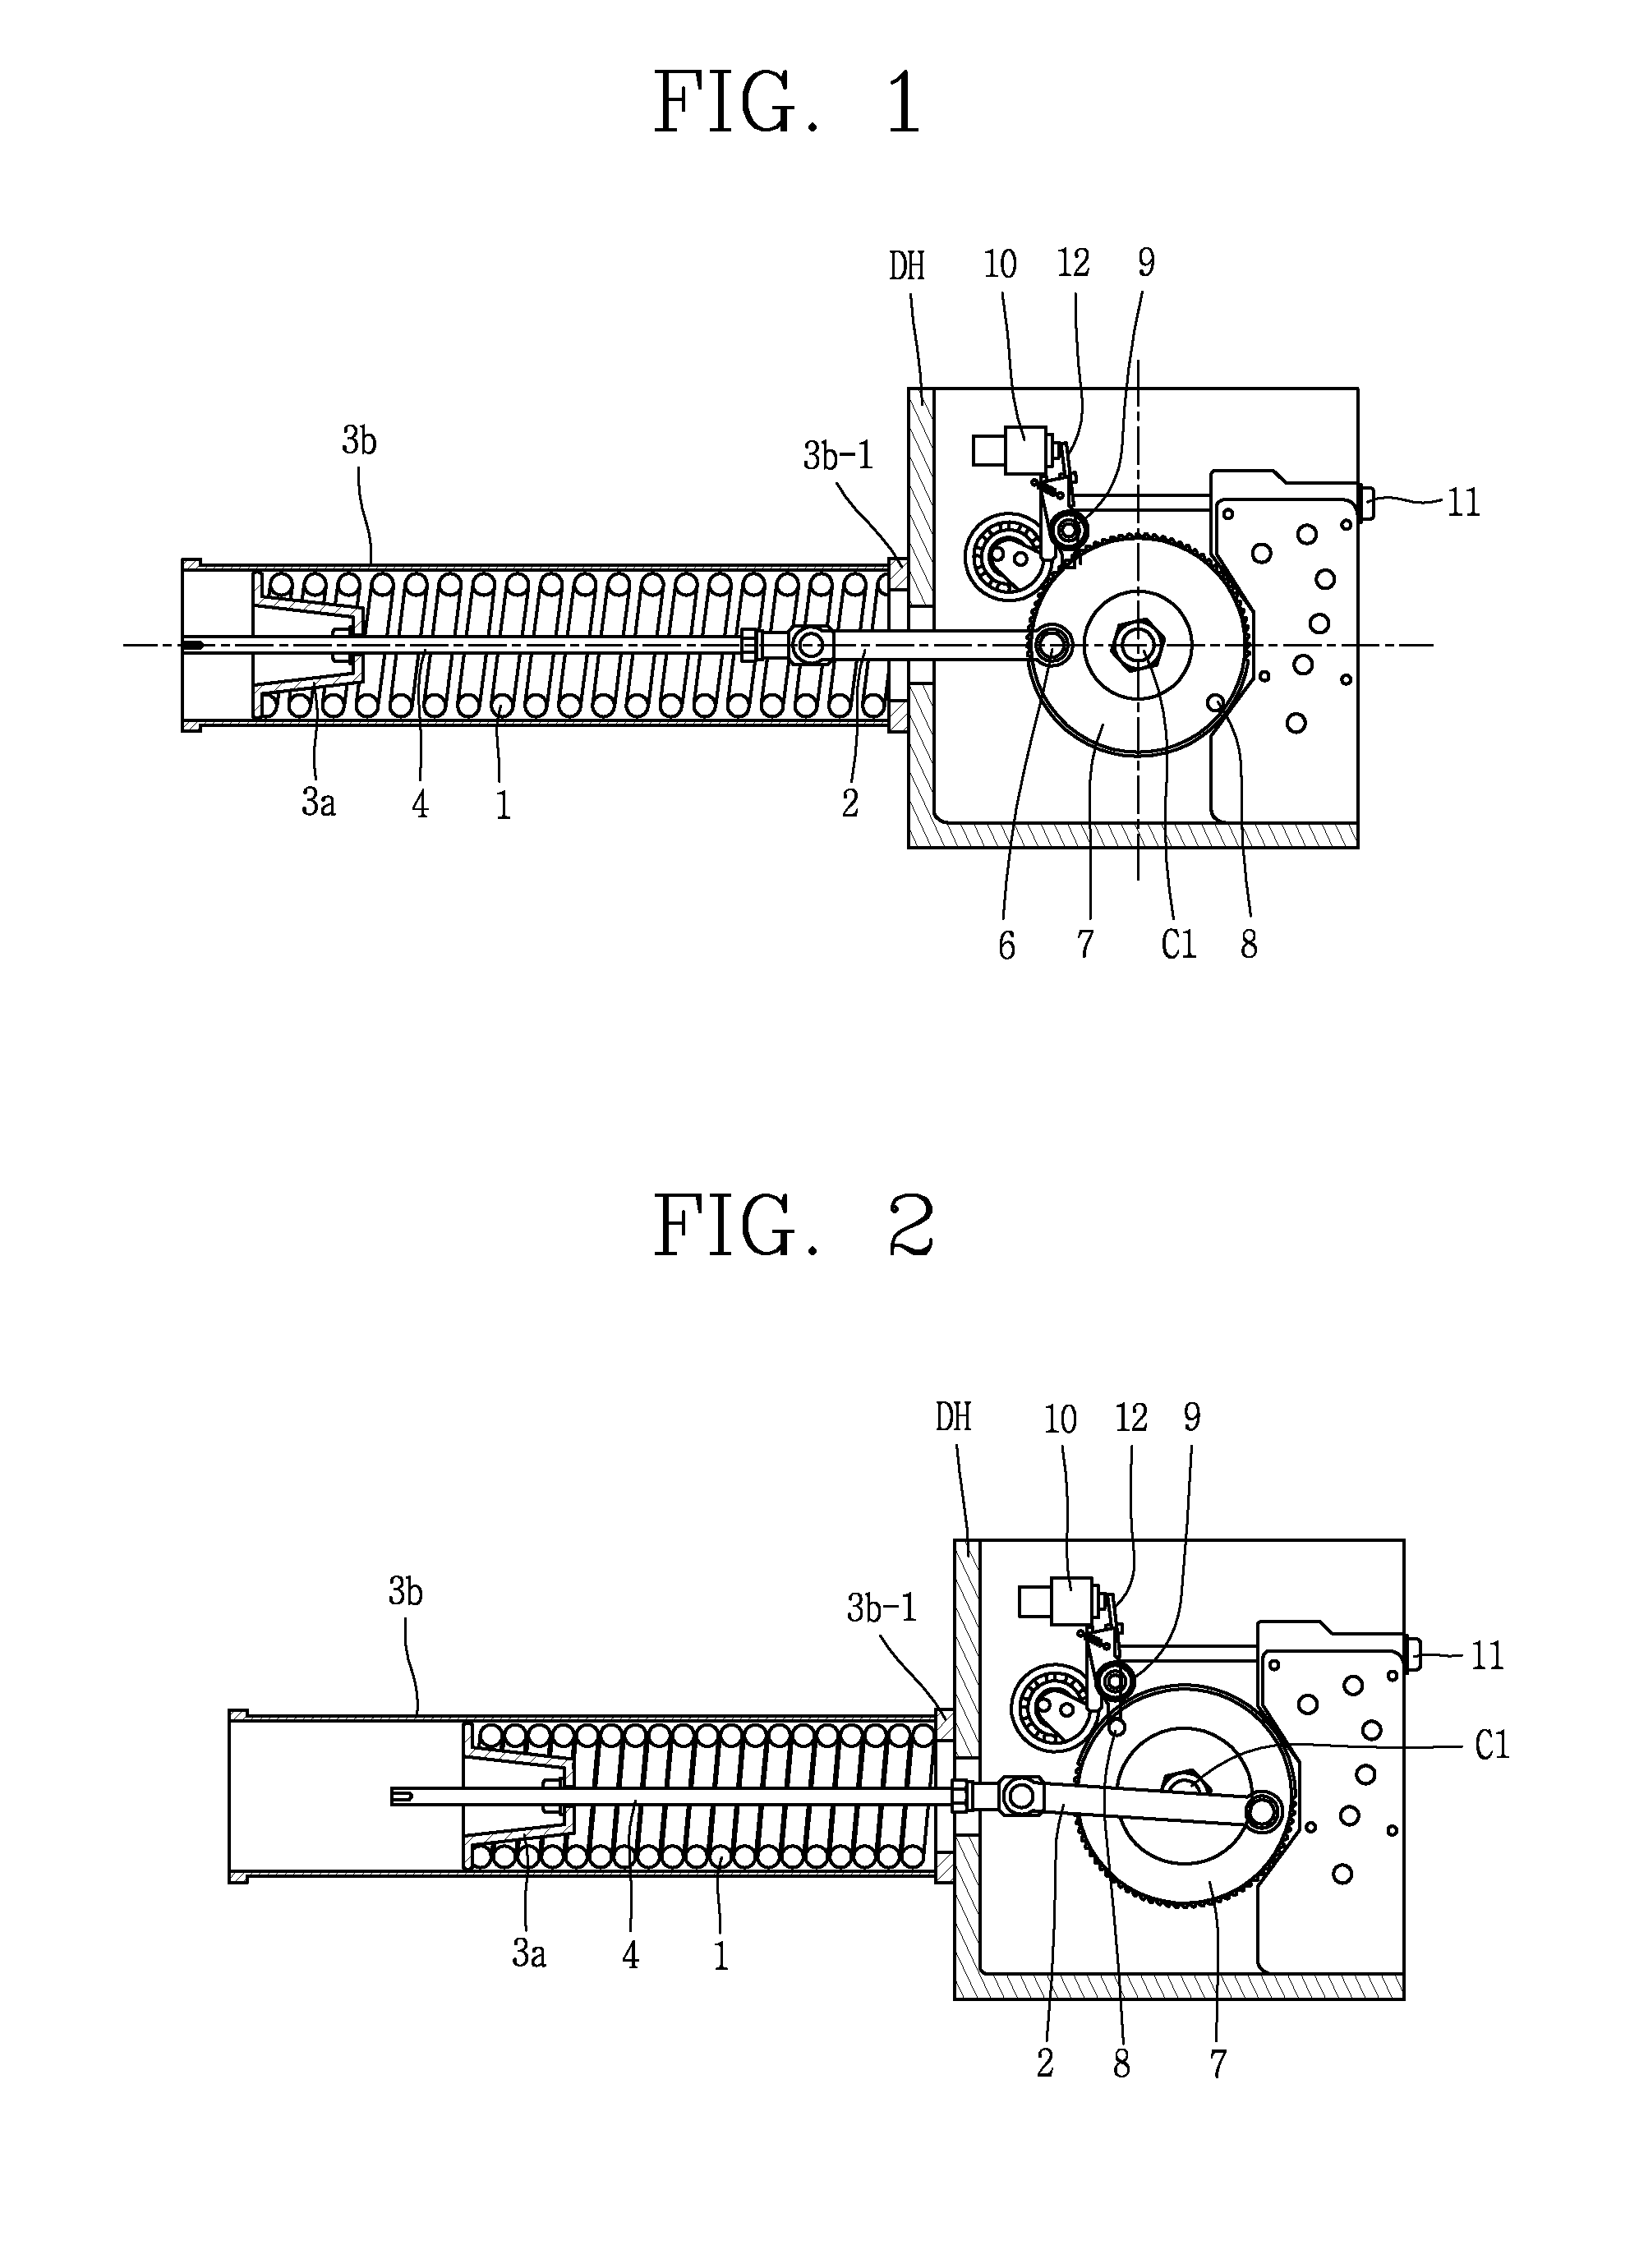 Spring actuator for circuit breaker